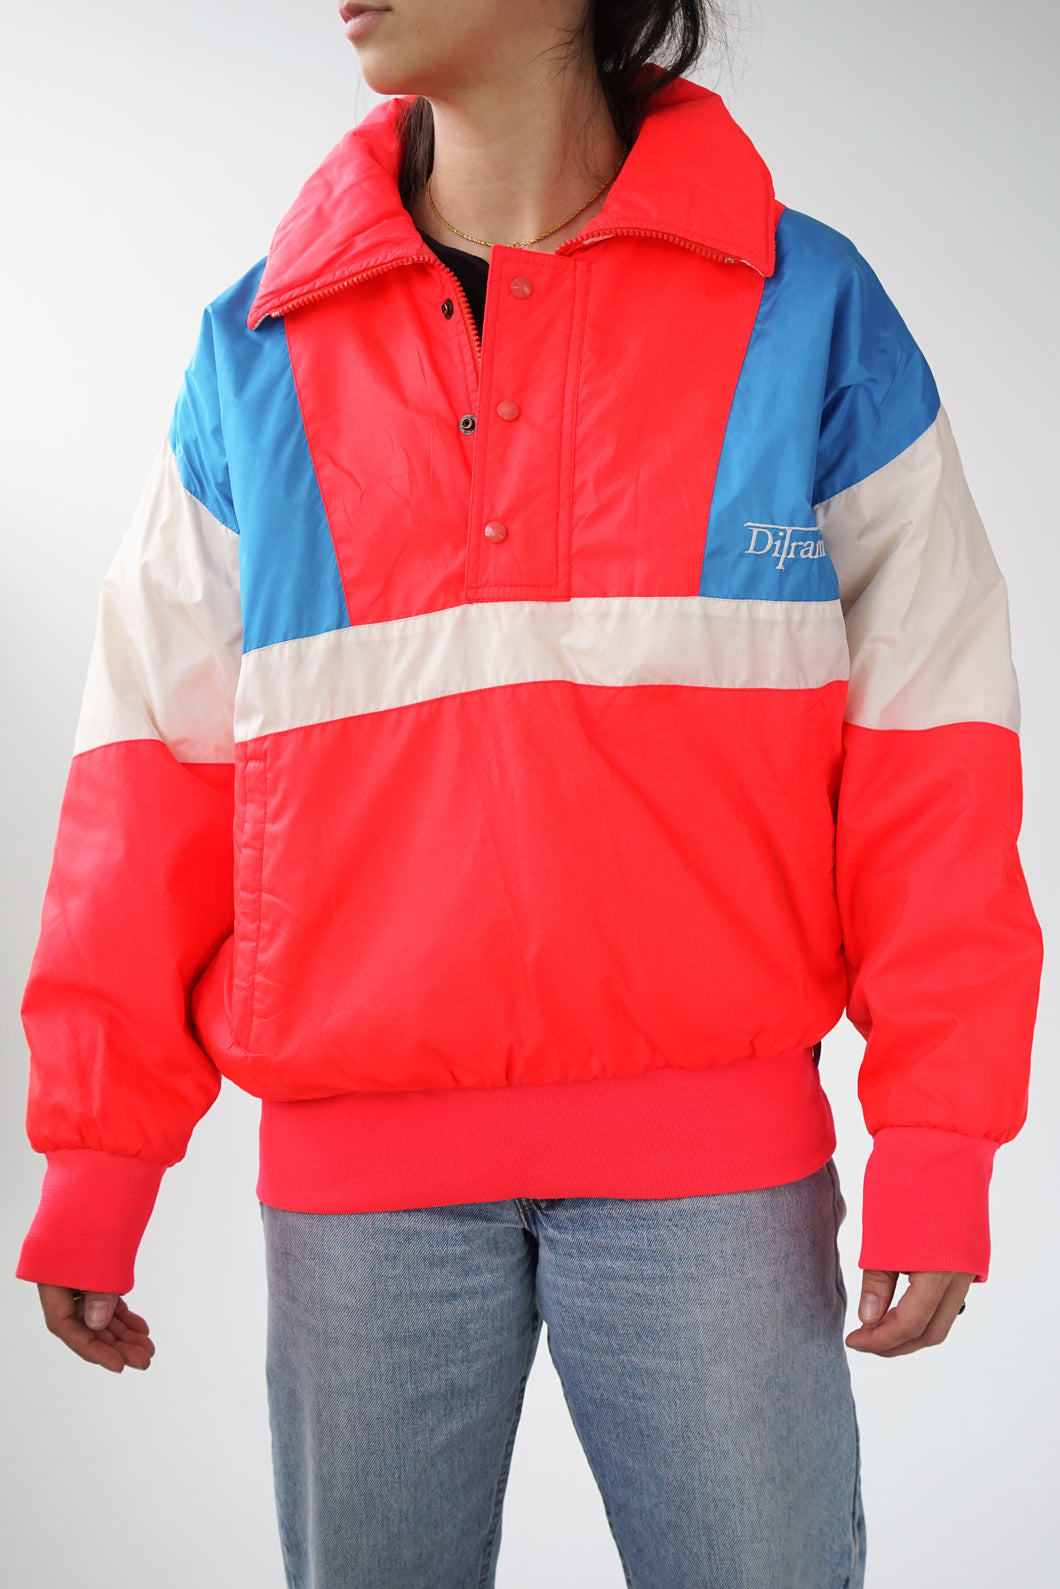 Rétro fluo Ditrani vintage 80s pull over ski jacket unisex size 36 (S)